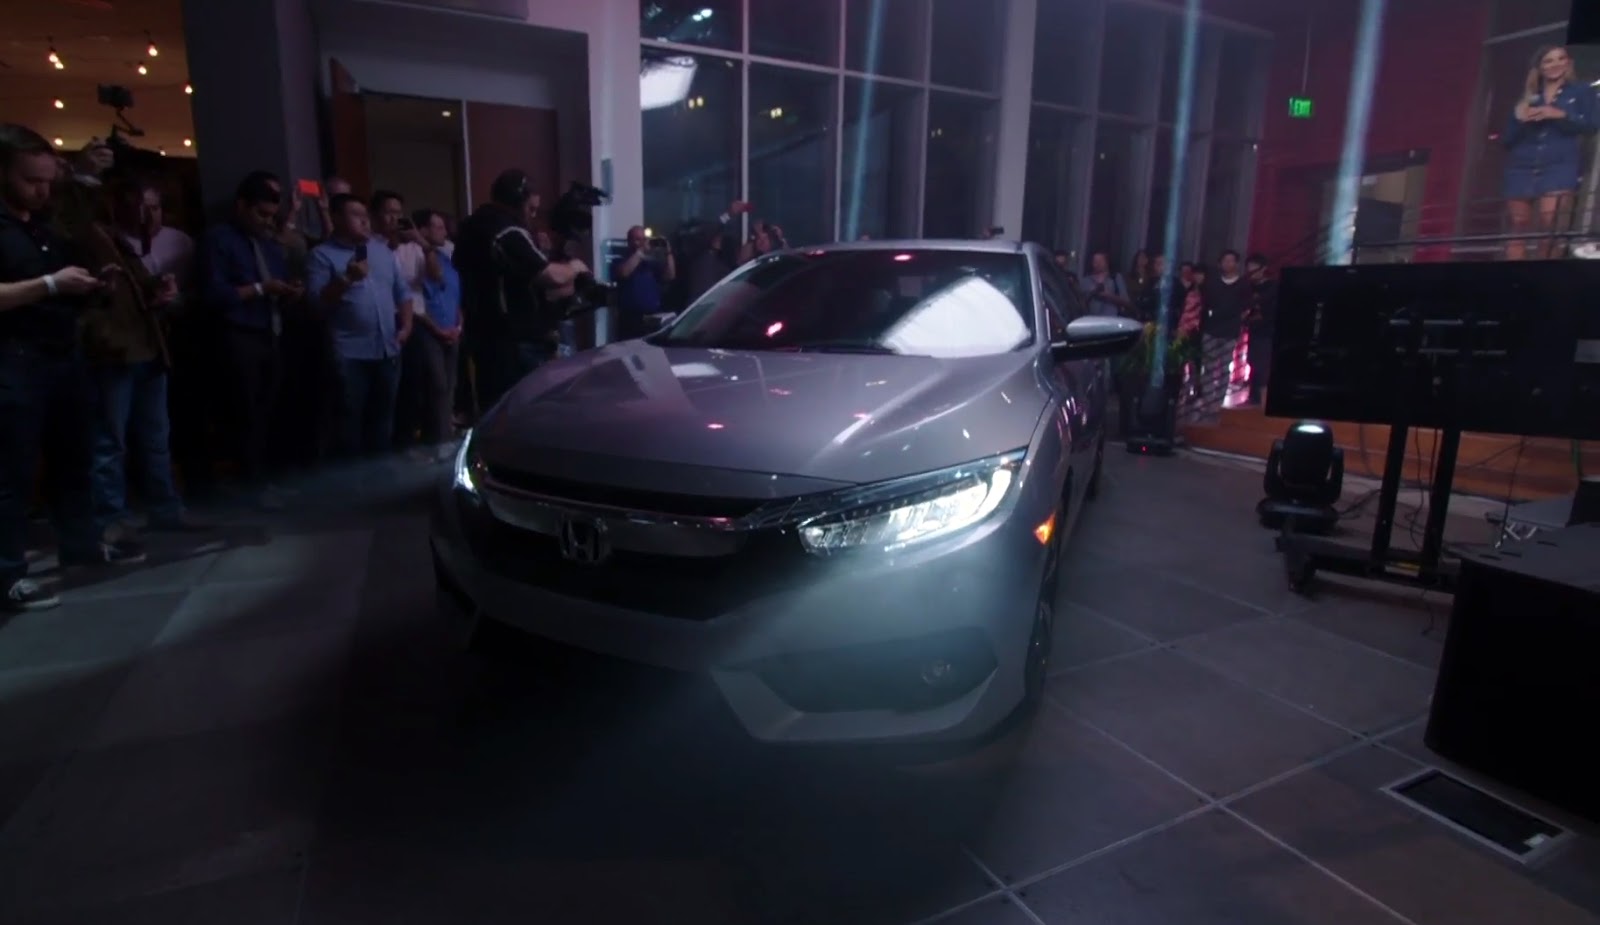 2016 Honda Civic Sedan Amerikan Versiyon Resim Galerisi